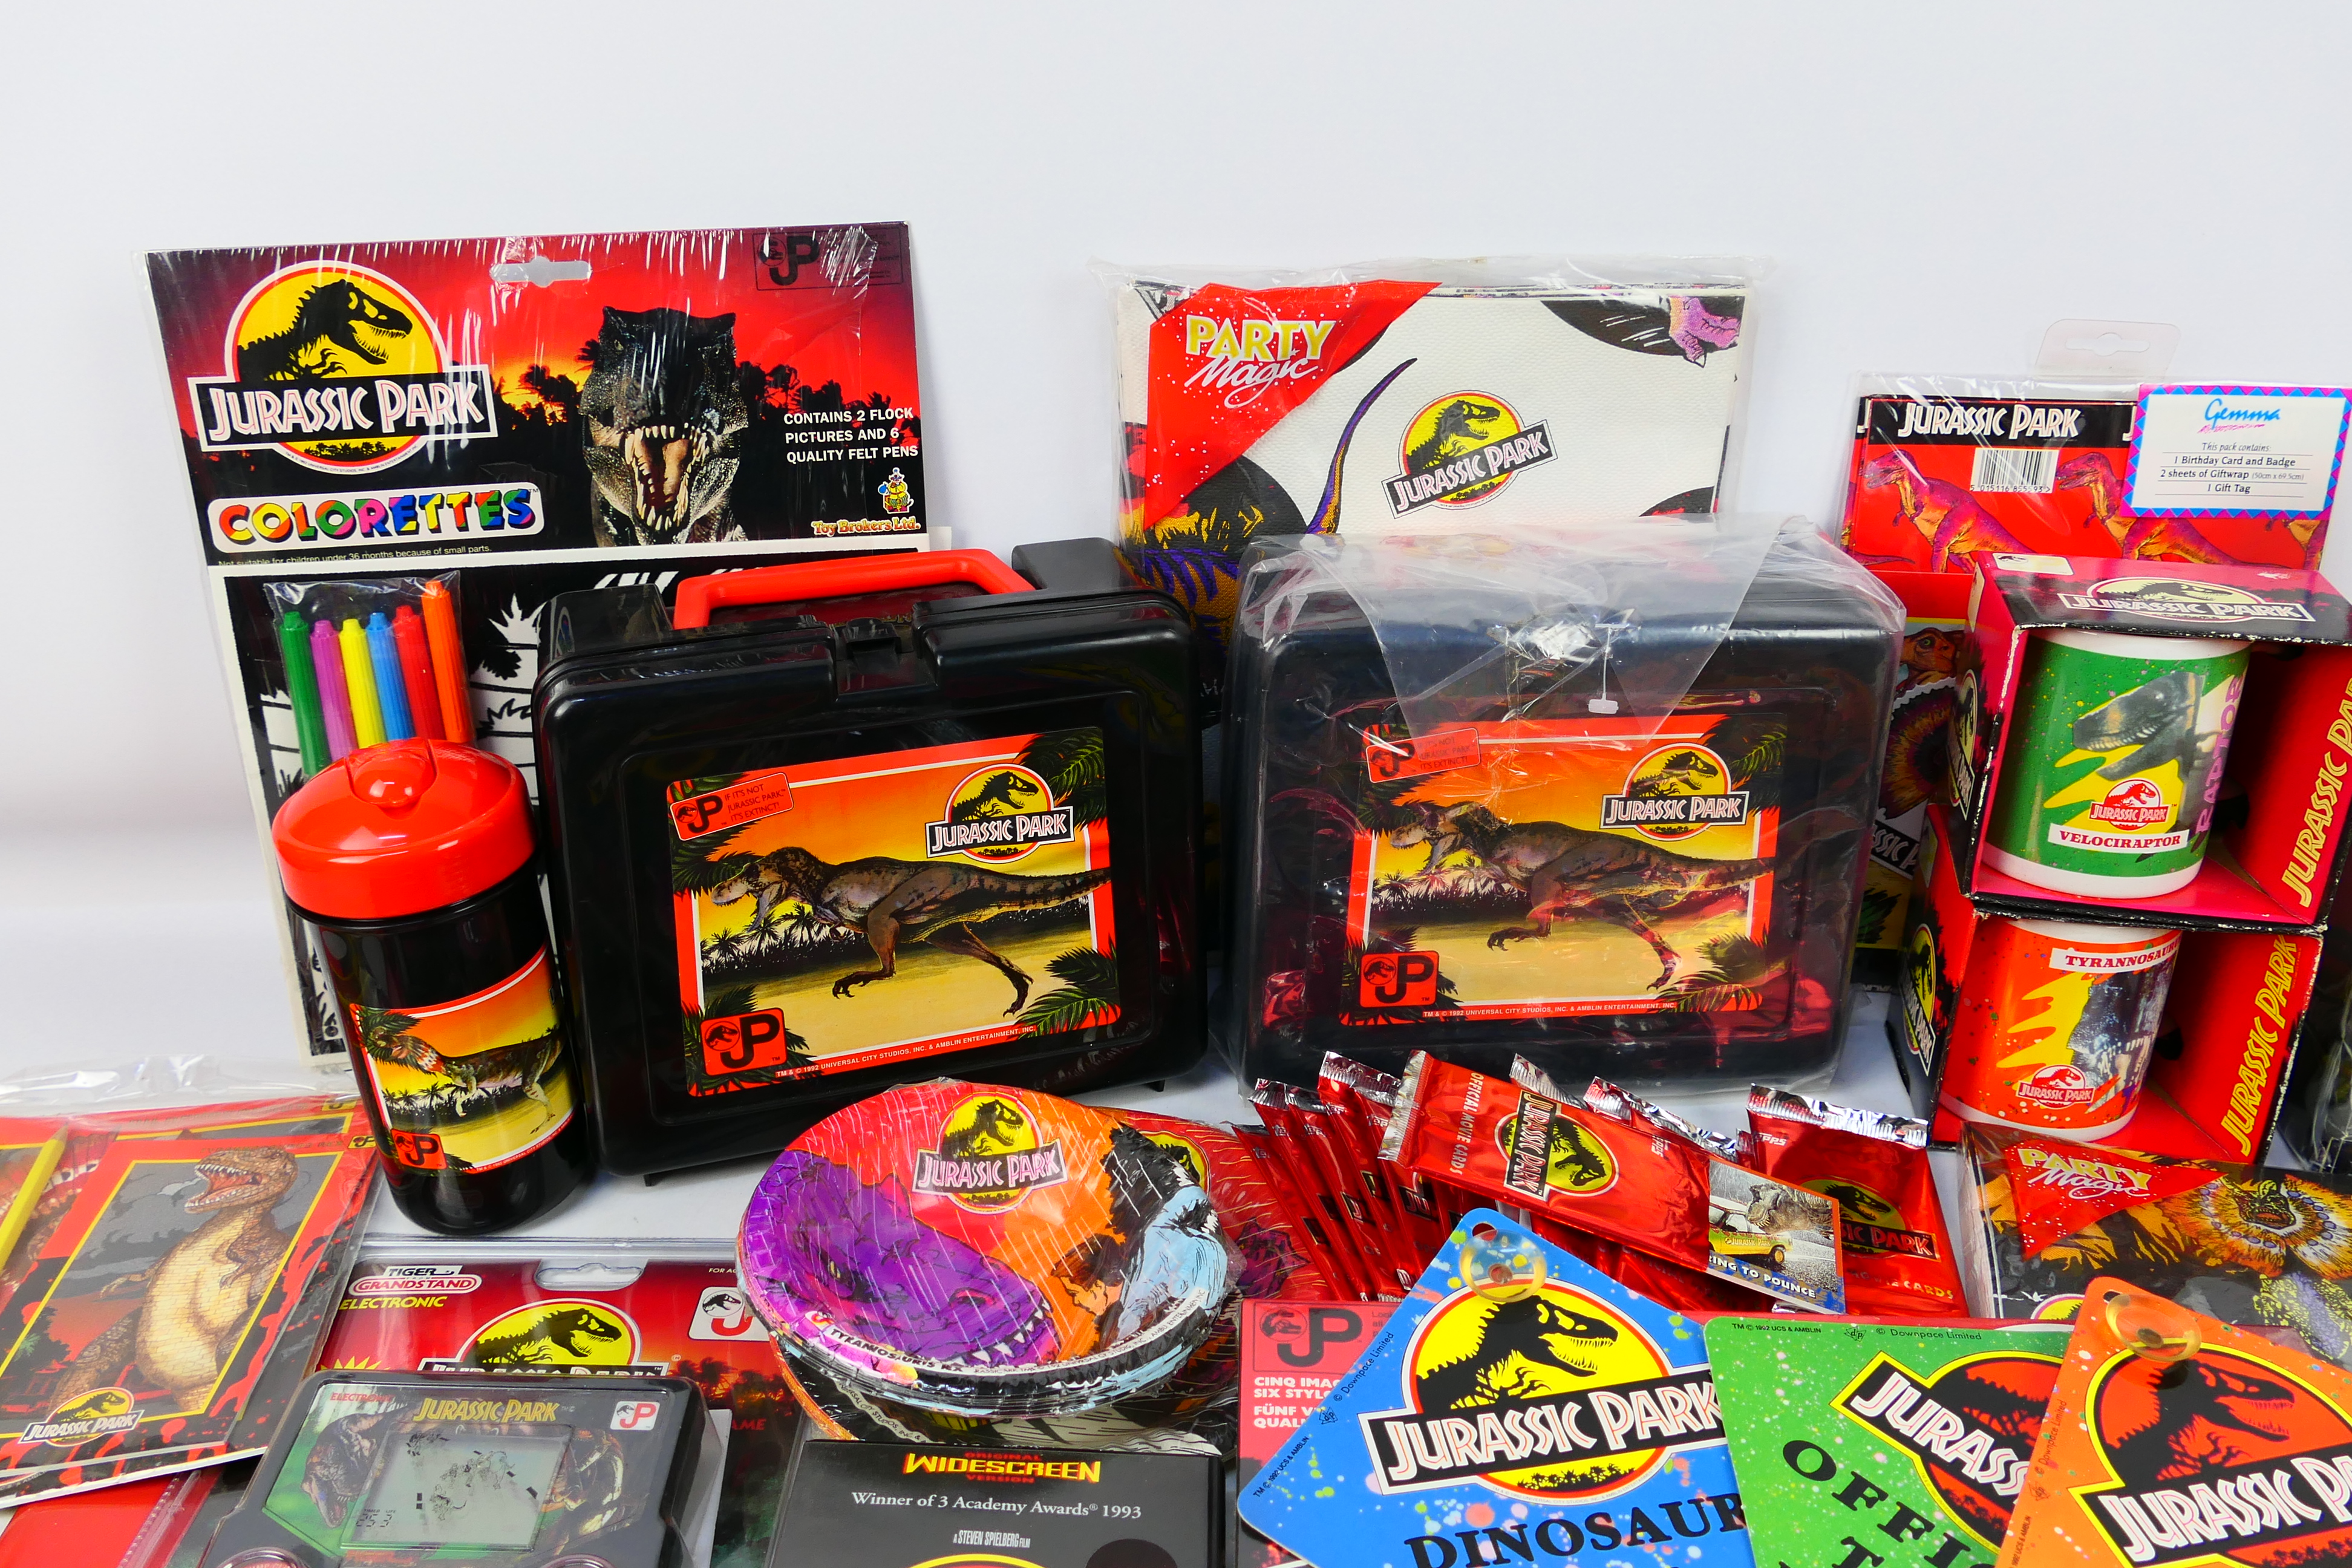 Tiger - Party - Jurassic Park - An assortment of Jurassic Park Merchandise. - Image 2 of 7